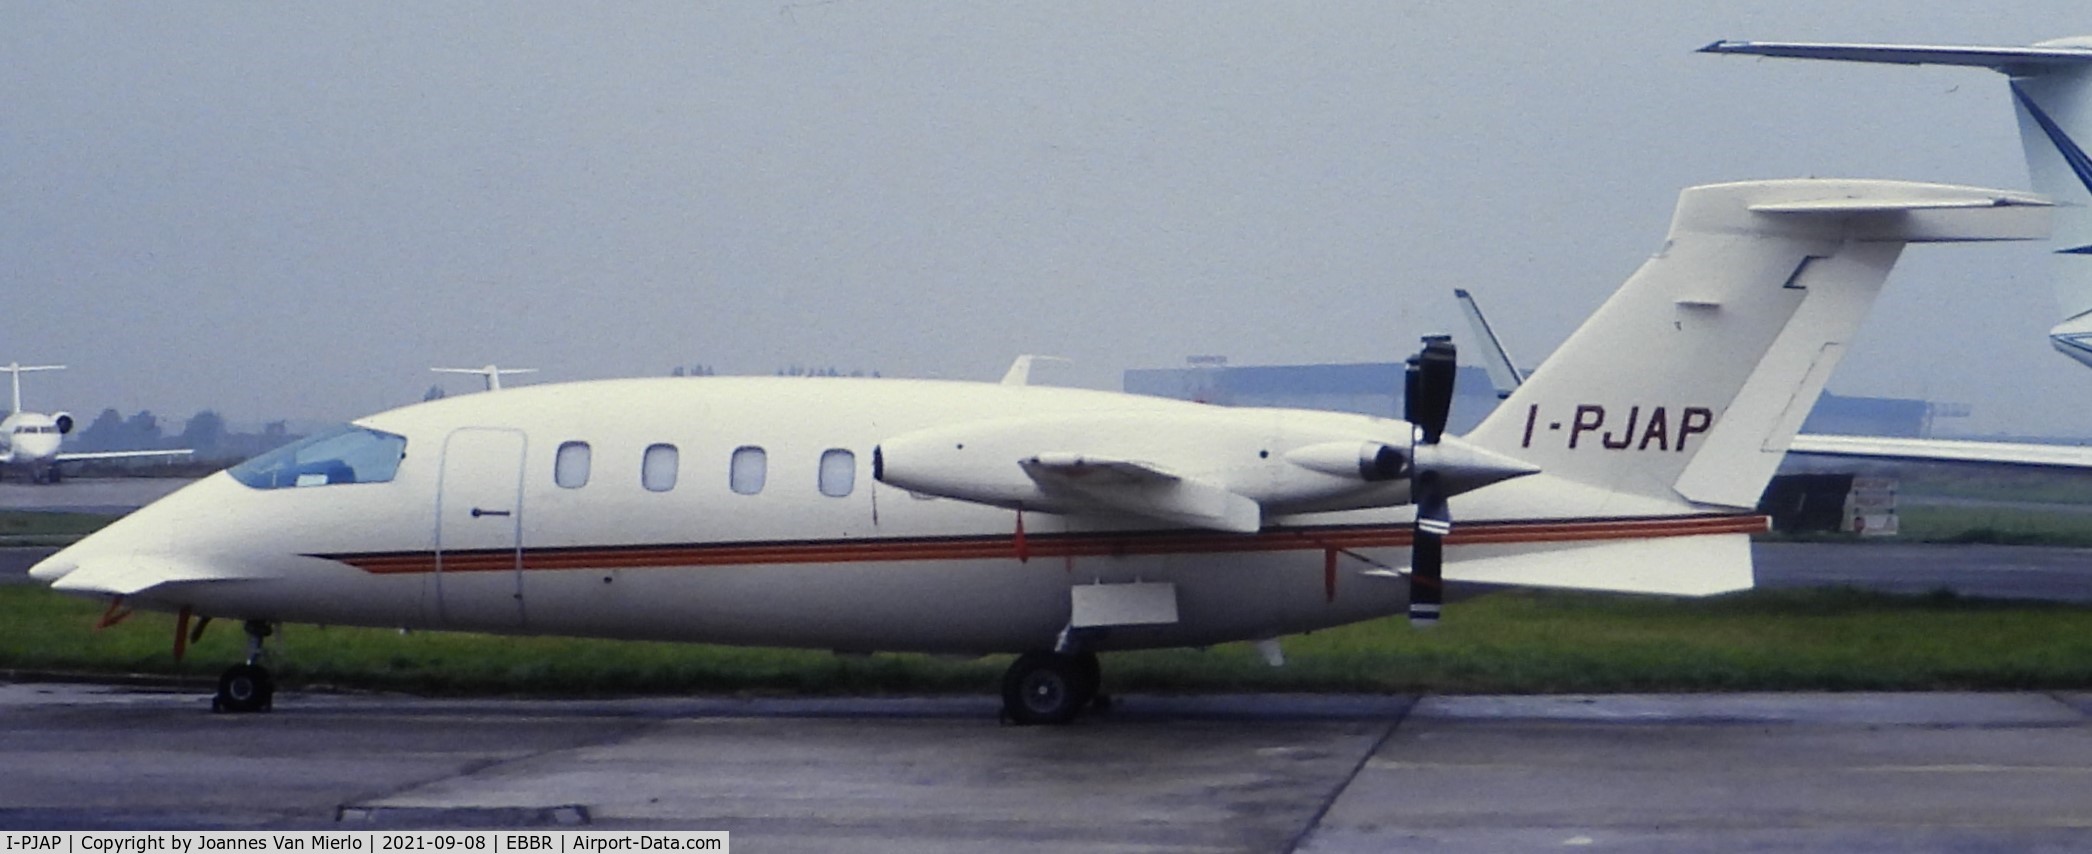 I-PJAP, 1992 Piaggio P-180 Avanti C/N 1013, Slide scan